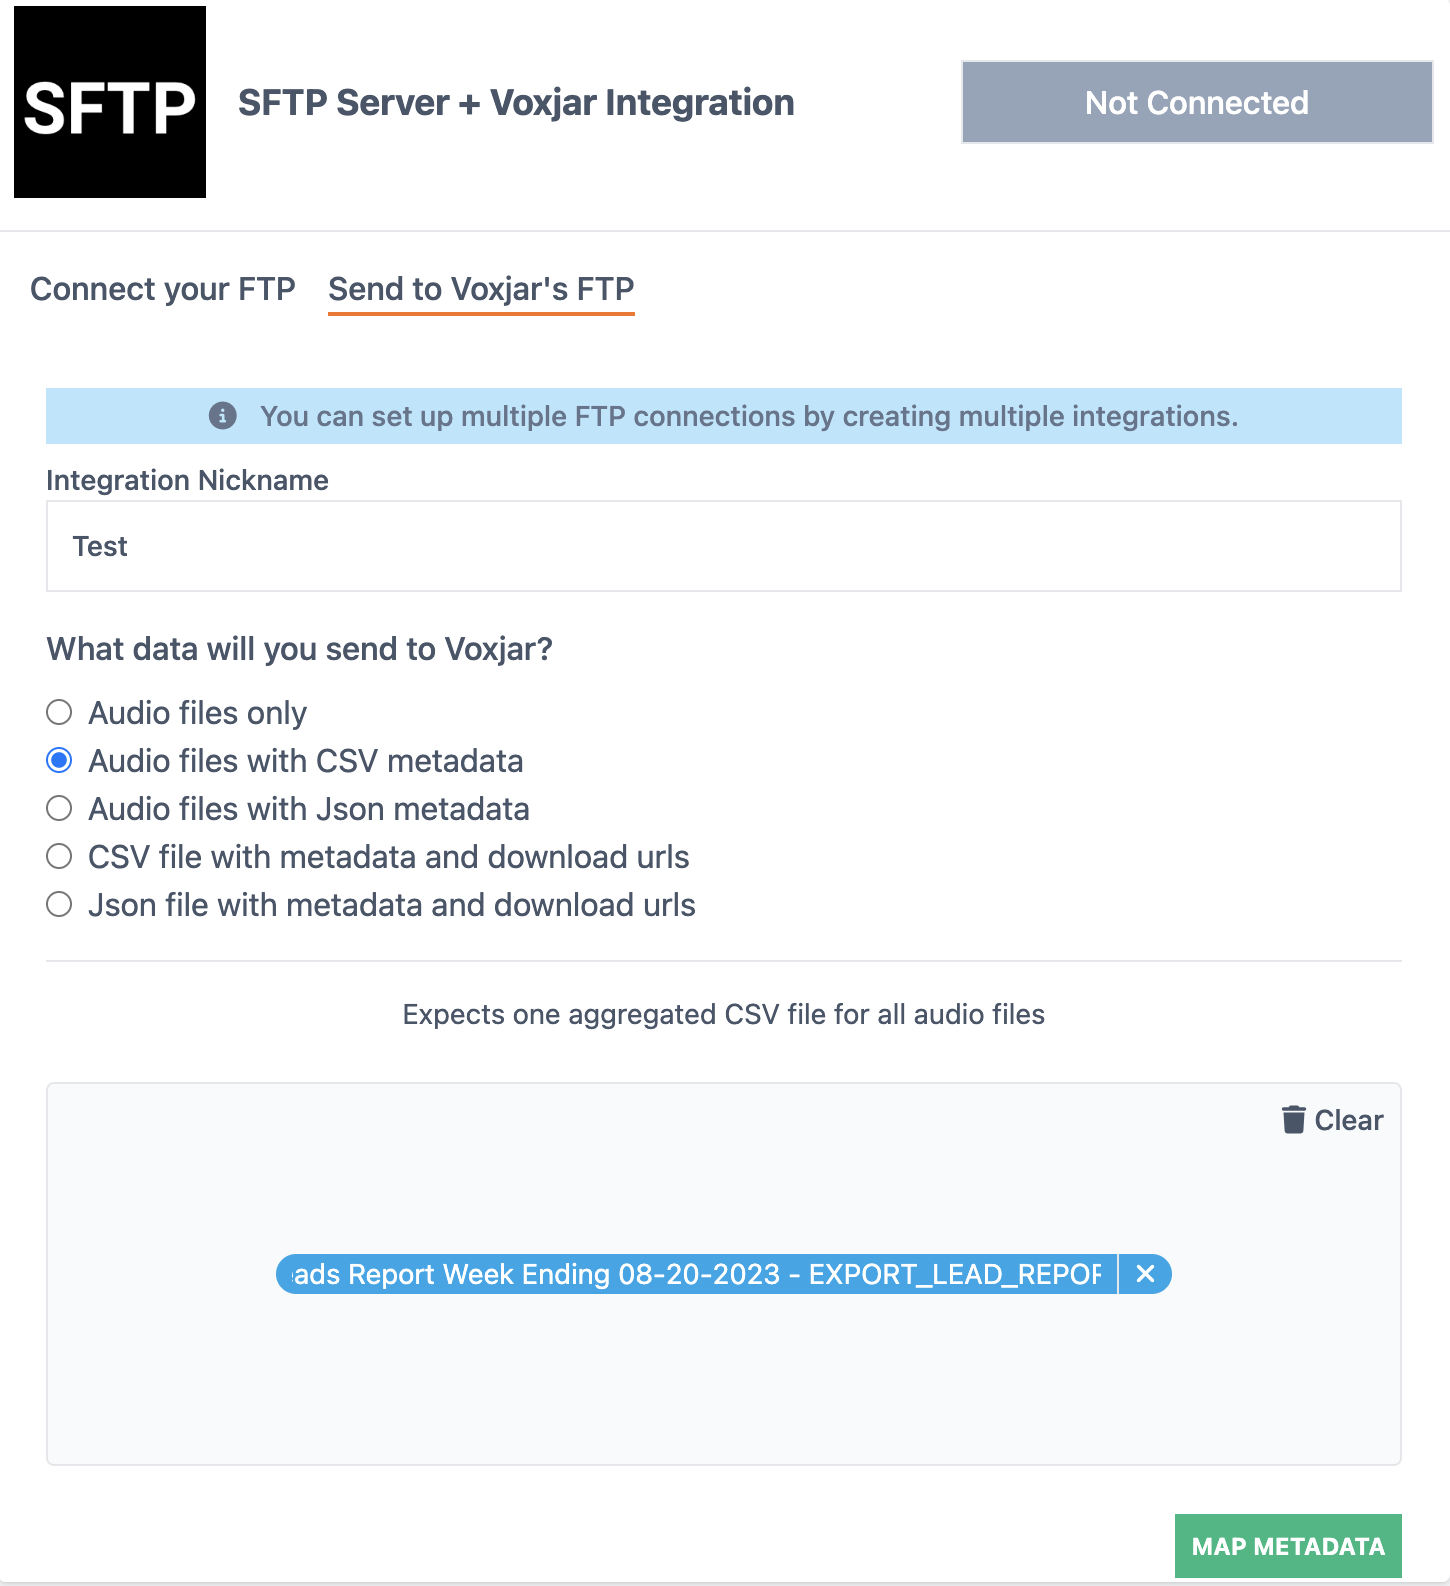 upload sample csv file for metadata parsing from Voxjar's ftp server